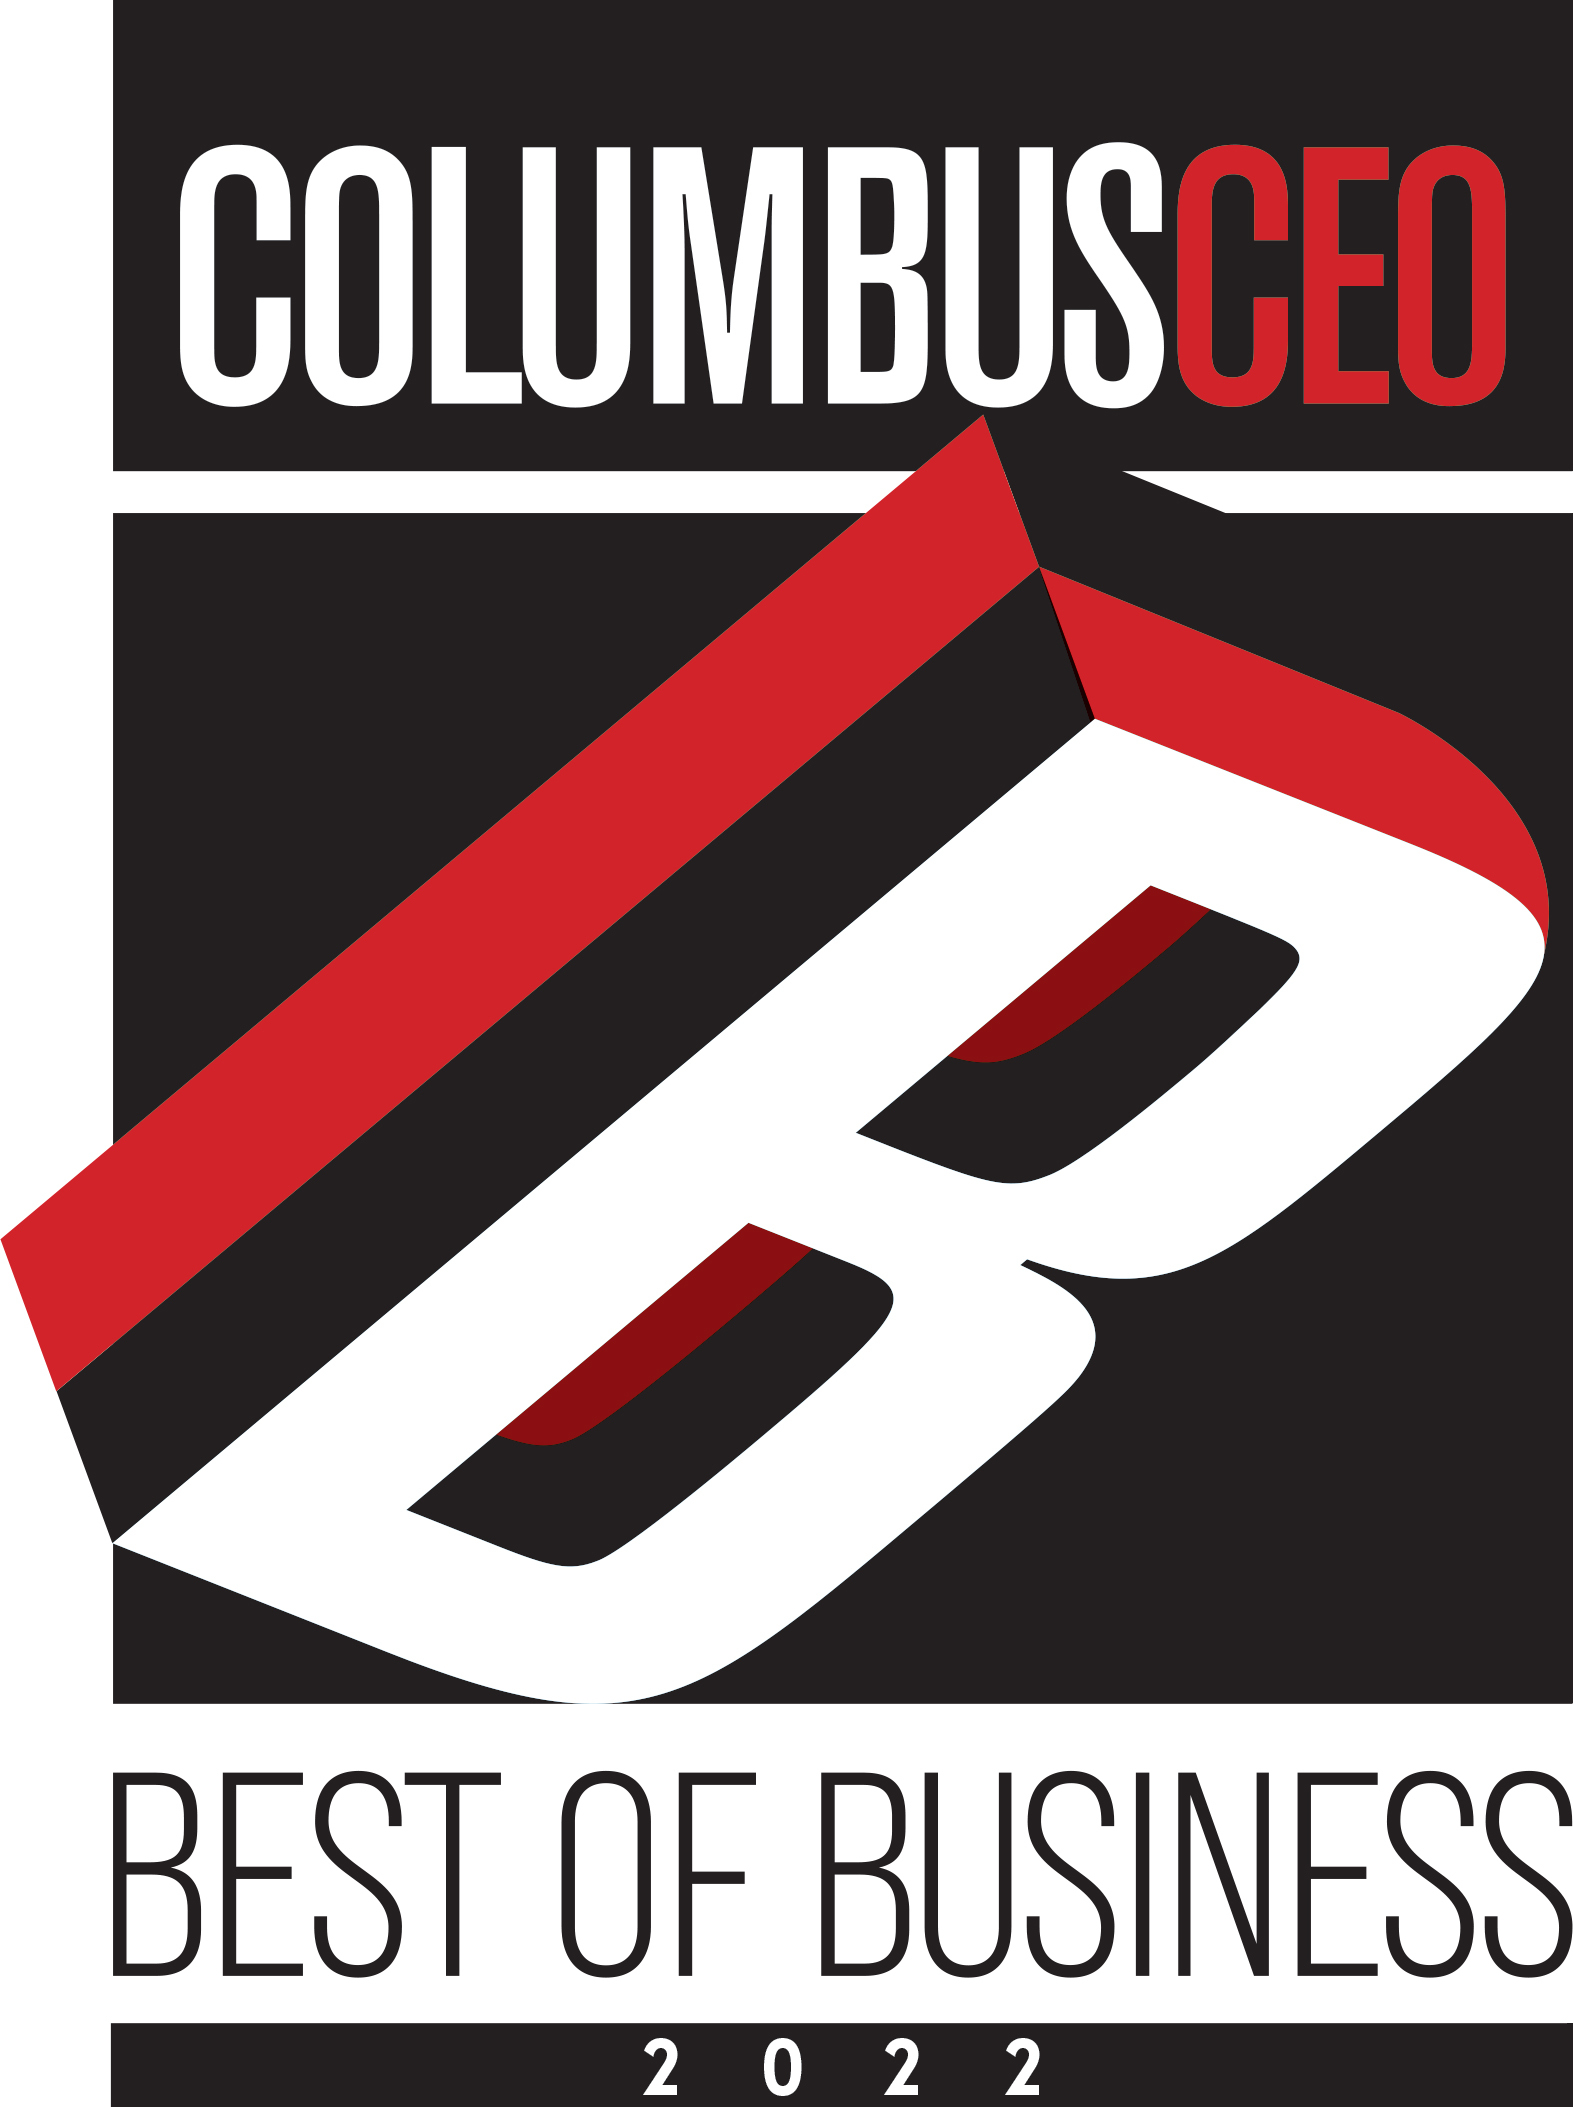 Best of Business 2022 logo